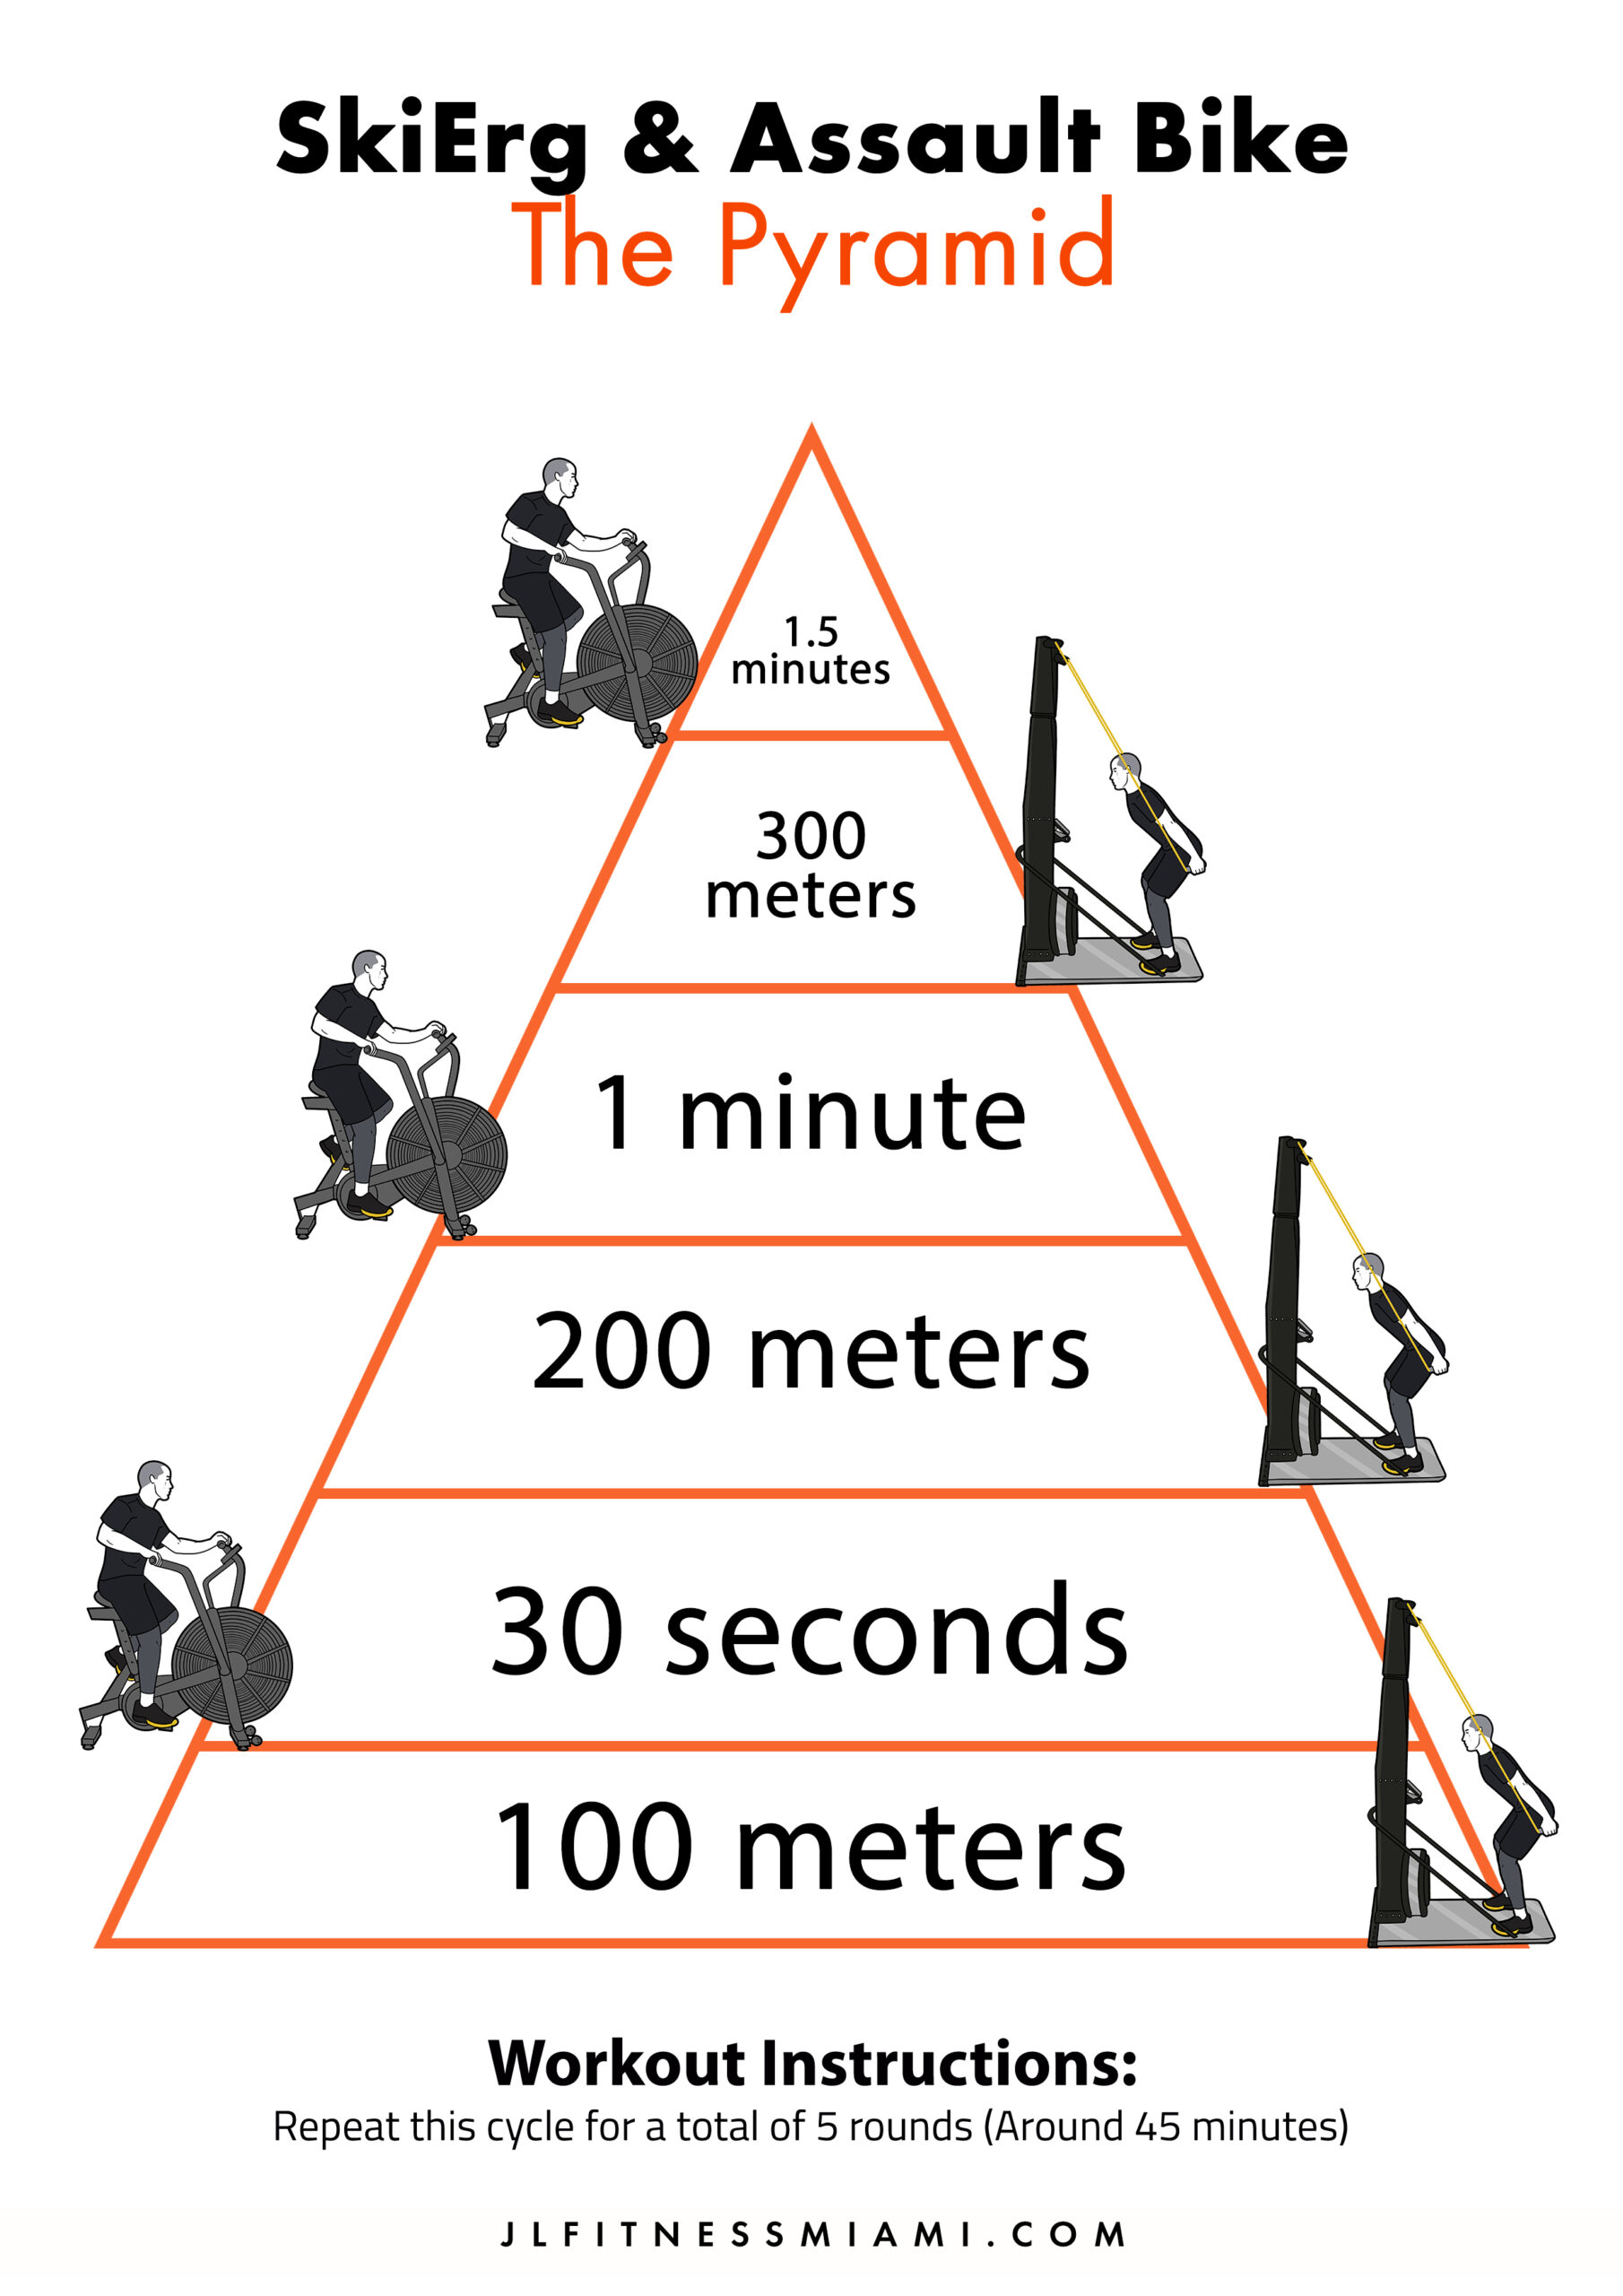 Skierg-and-Assault-Bike-Pyramid-Workout